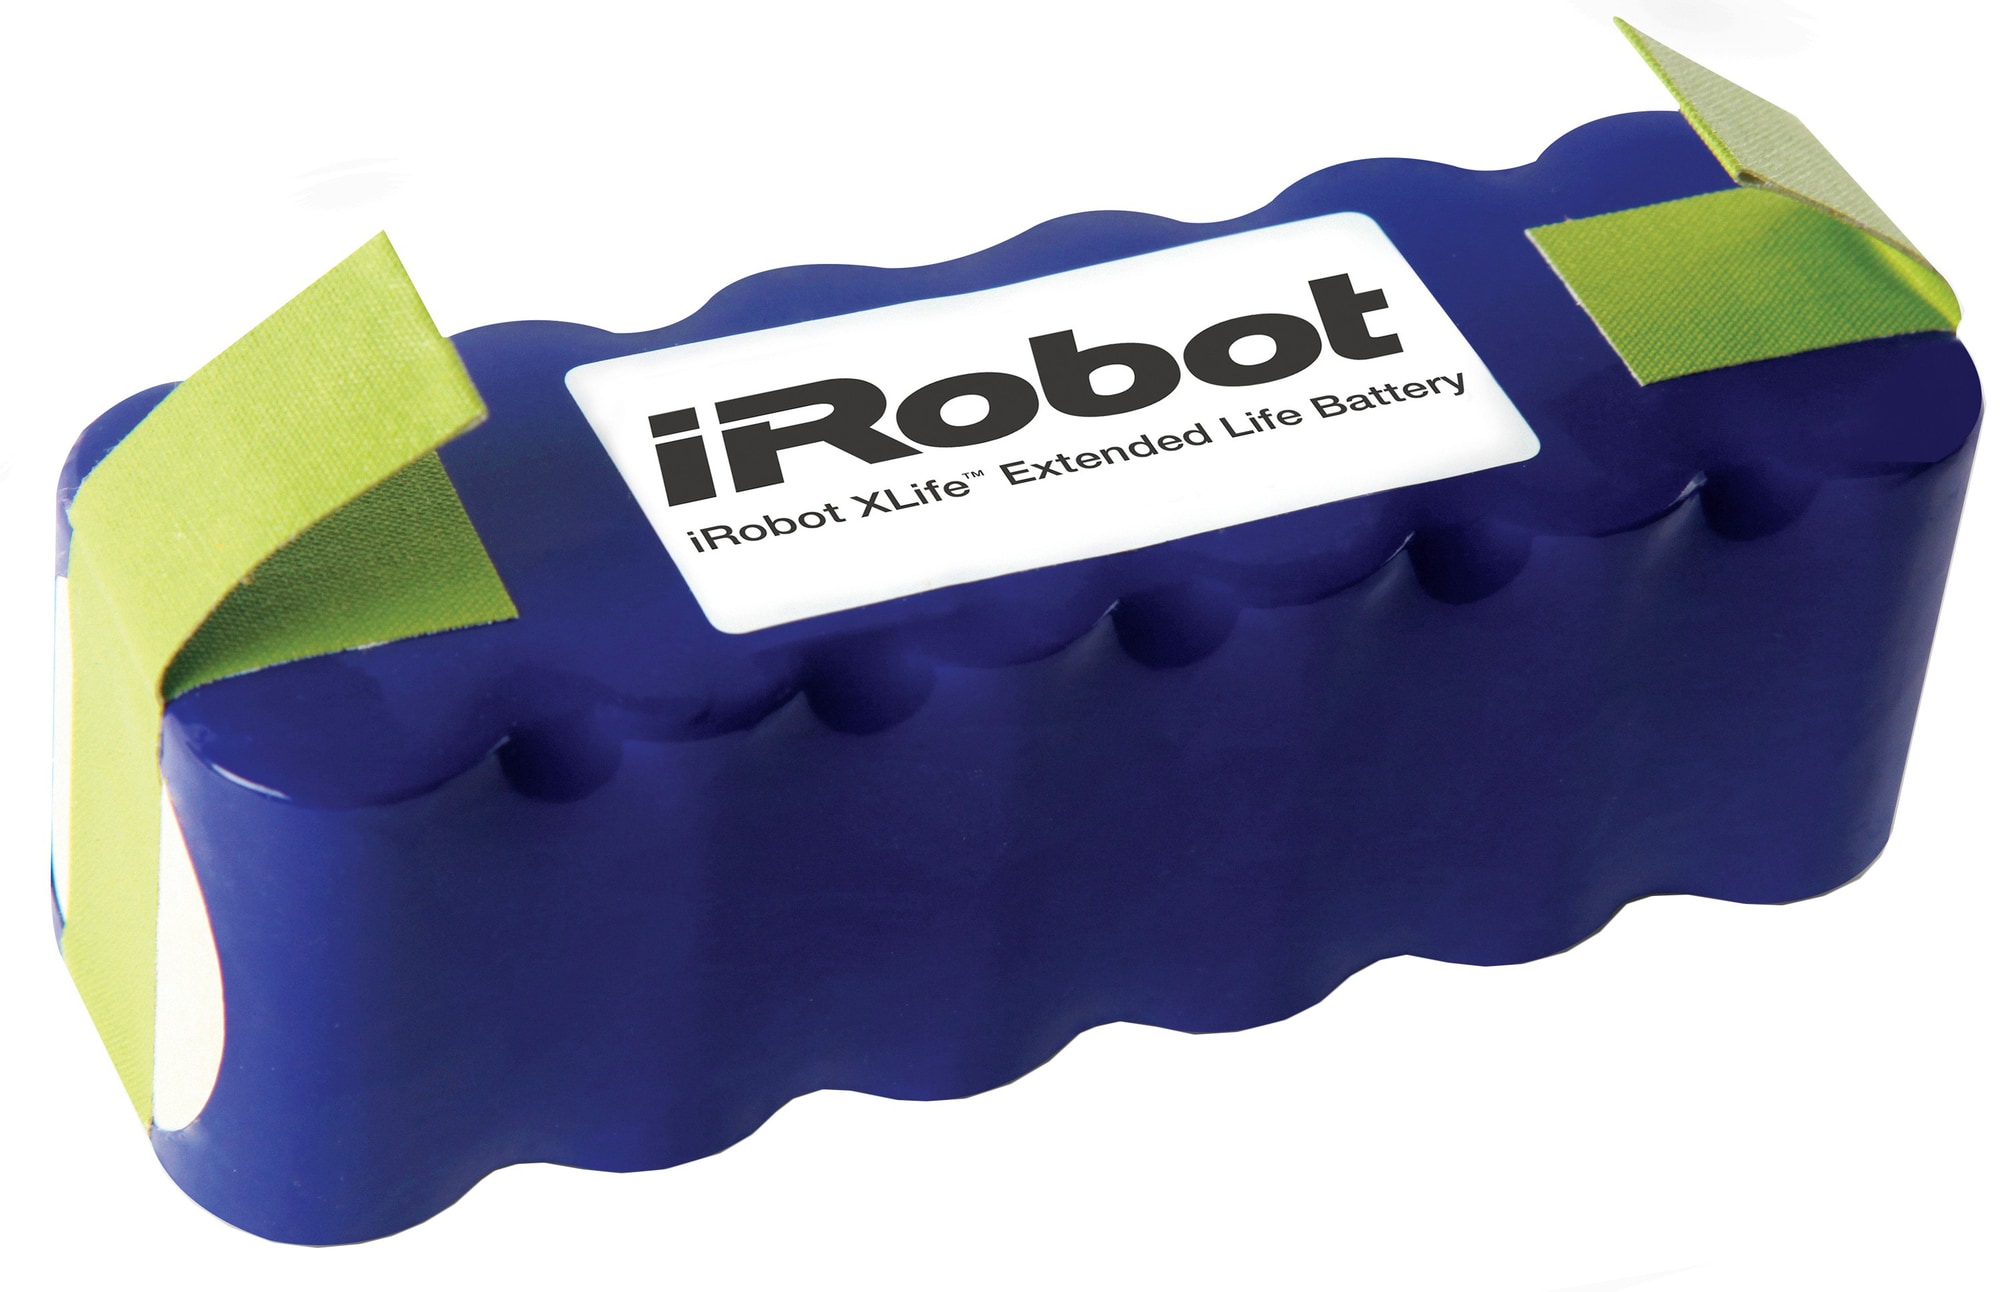 iRobot Roomba XLife batteri - Elkjøp